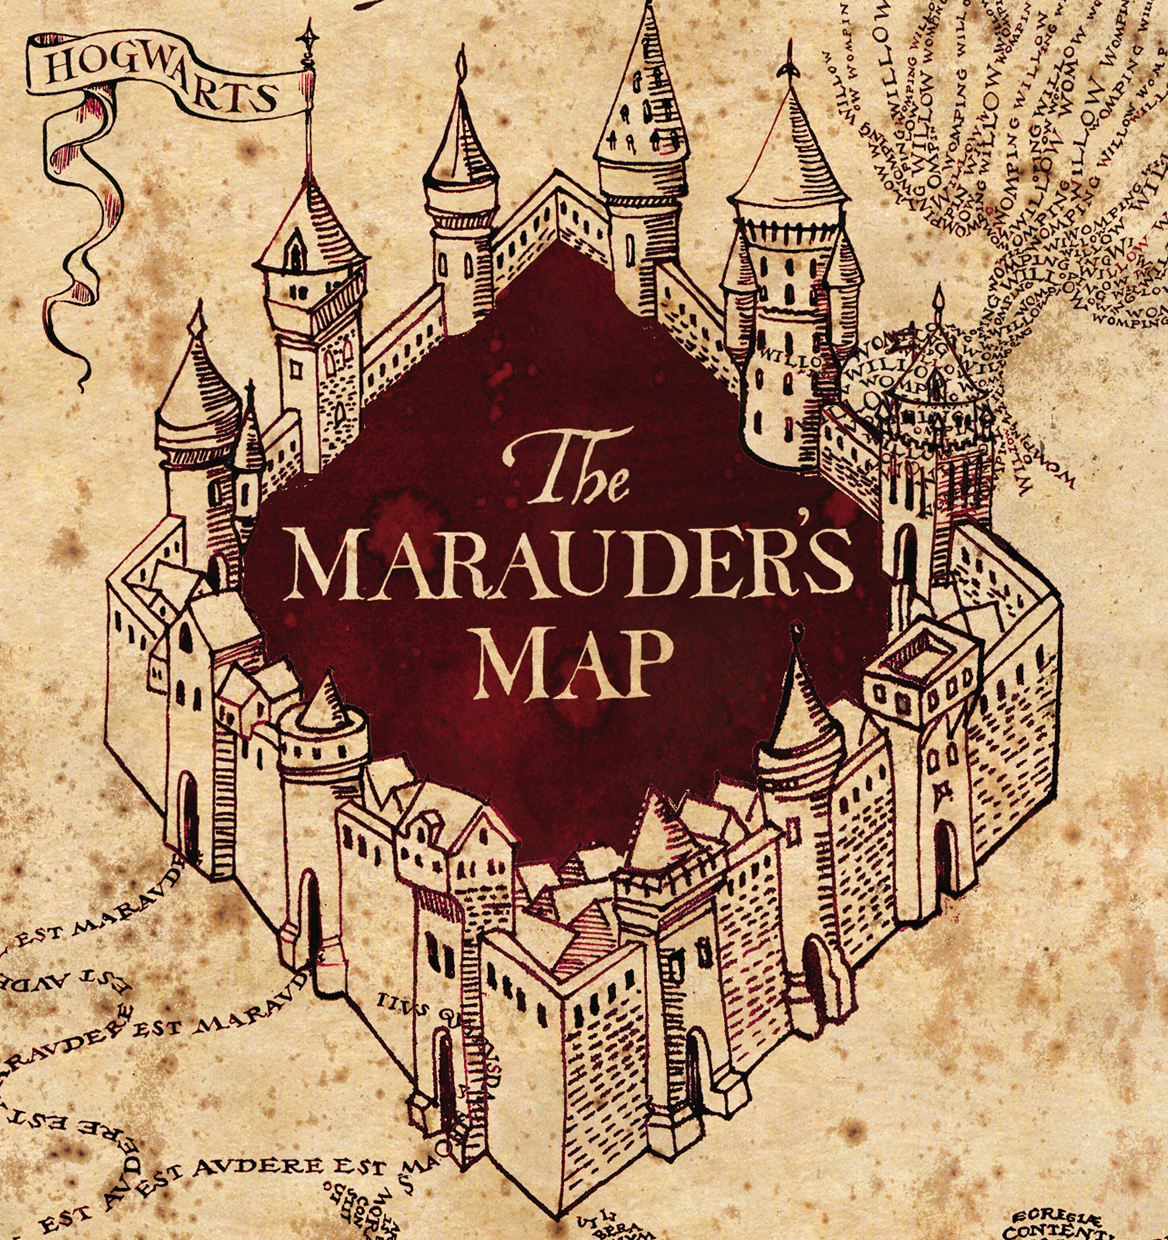 The Marauders Map - forum dafont.com